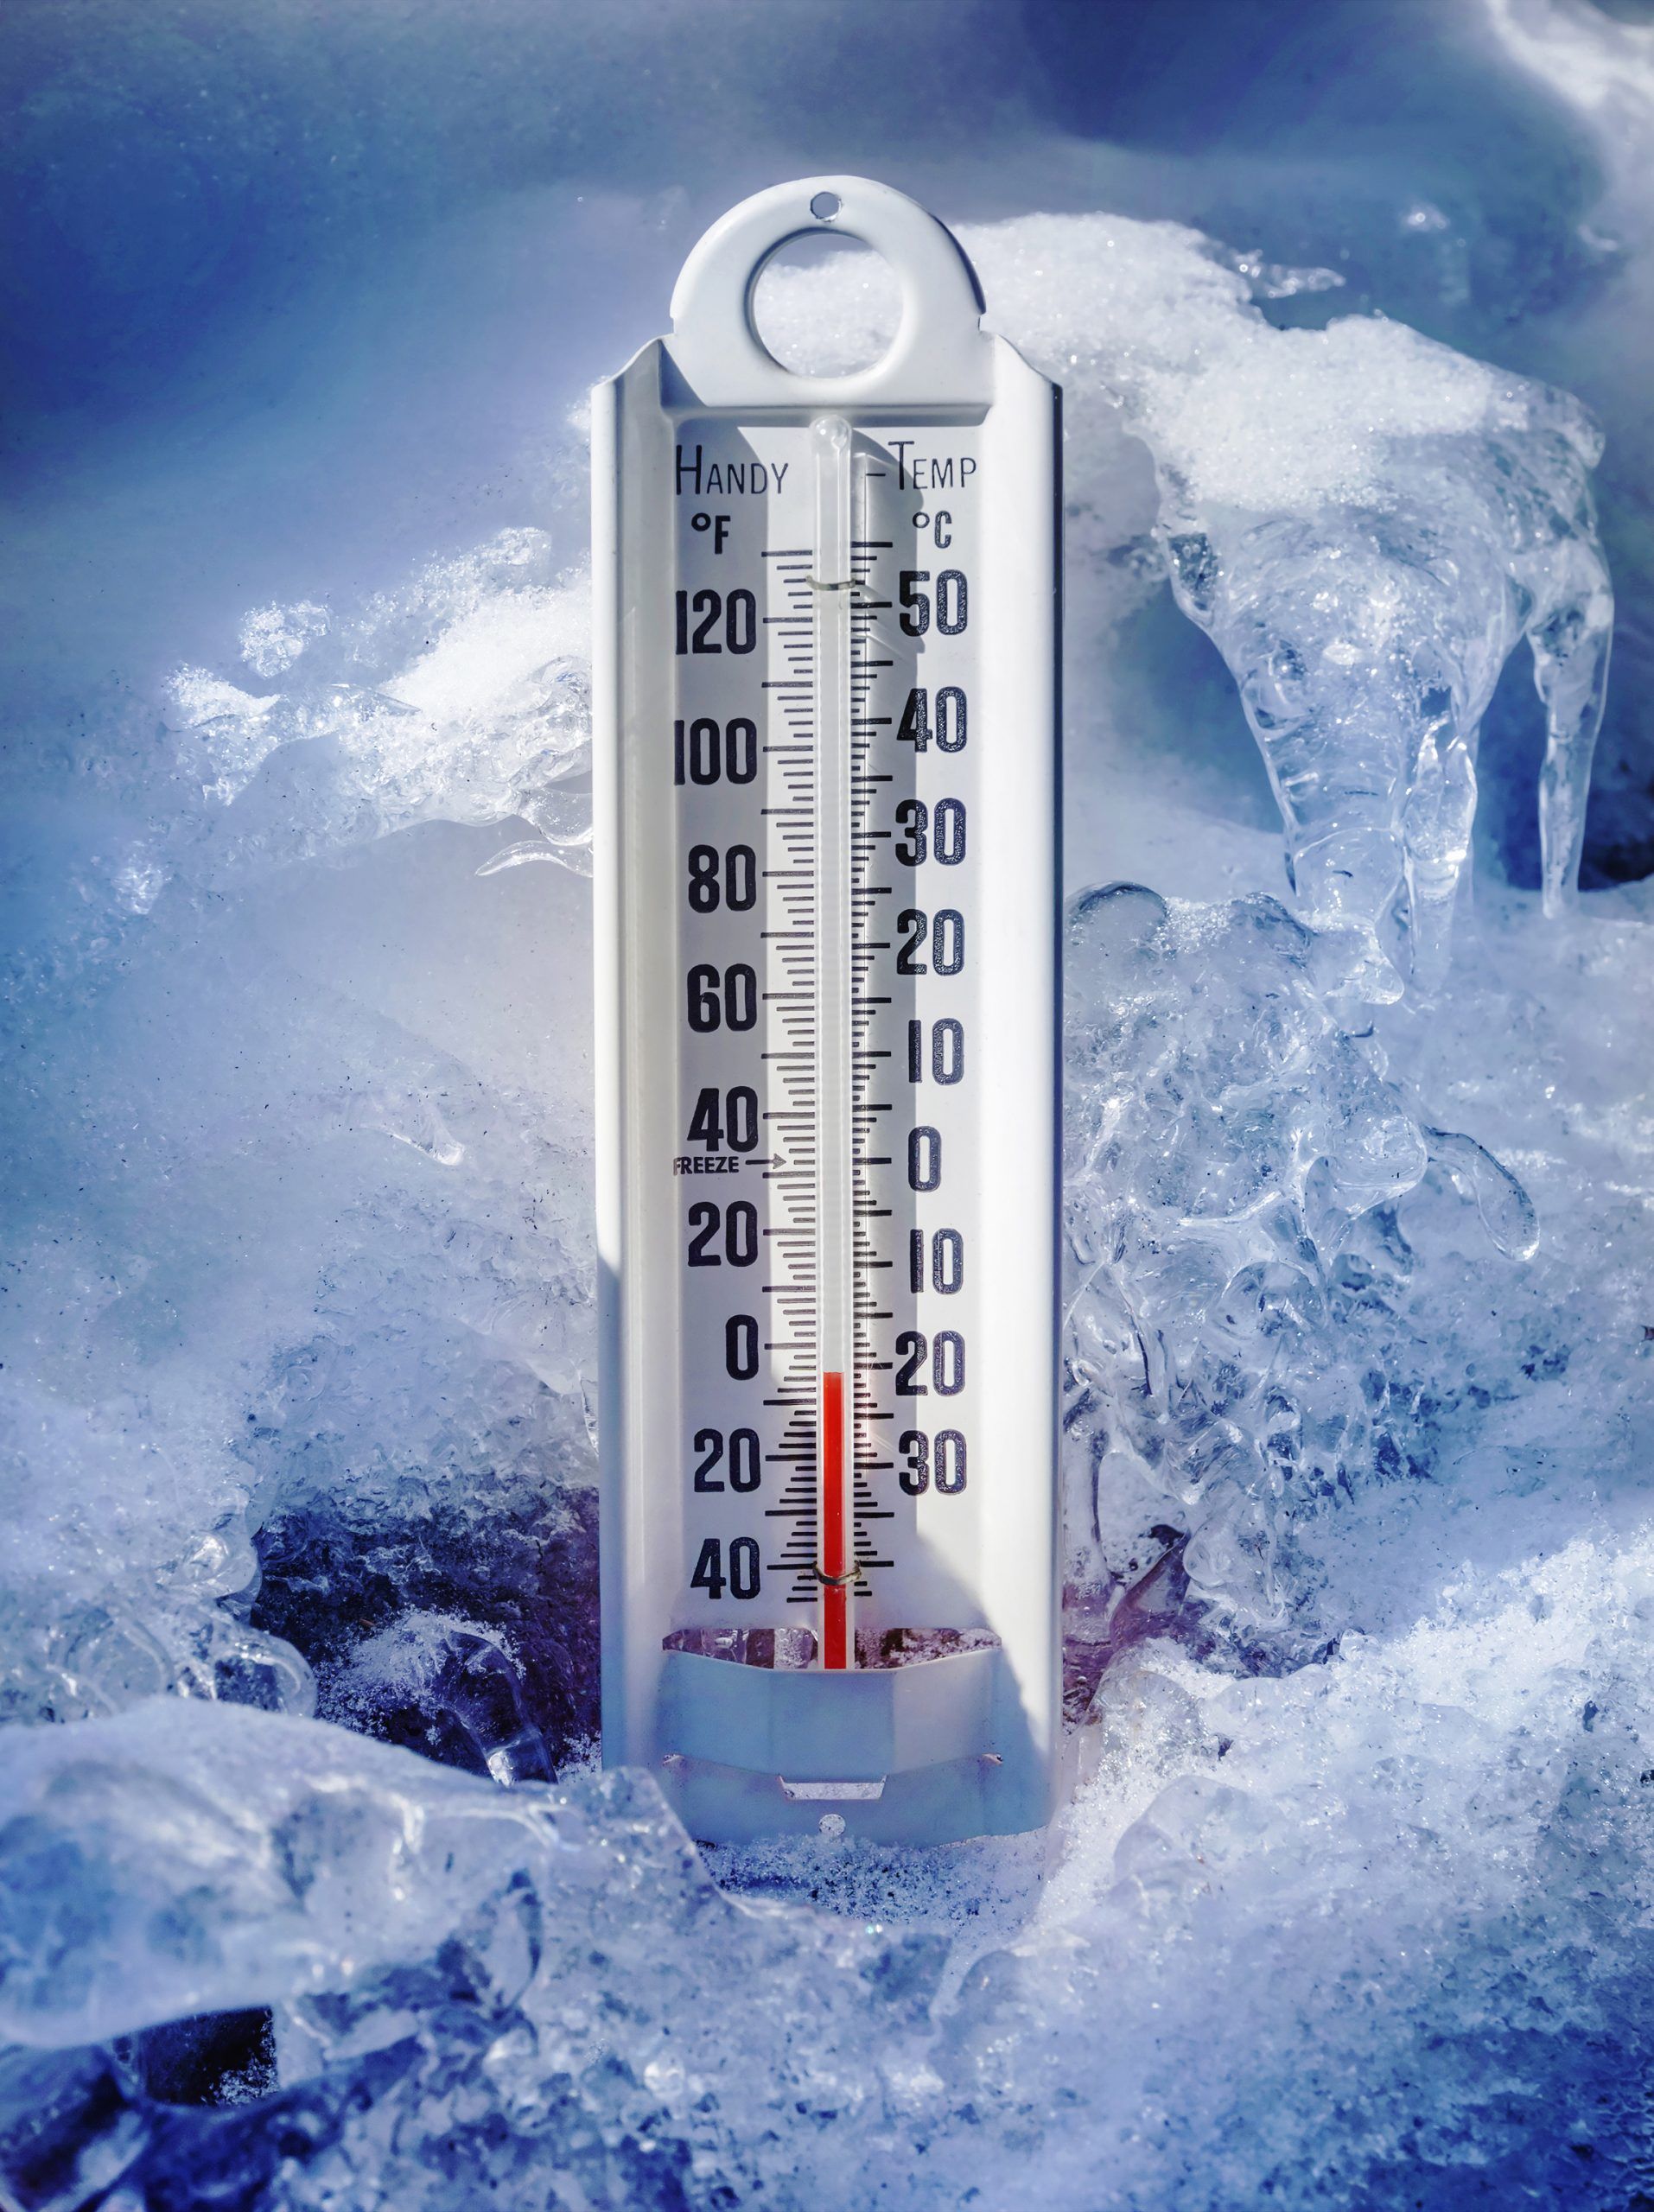 Extreme cold weather alert issued for Norfolk, Haldimand